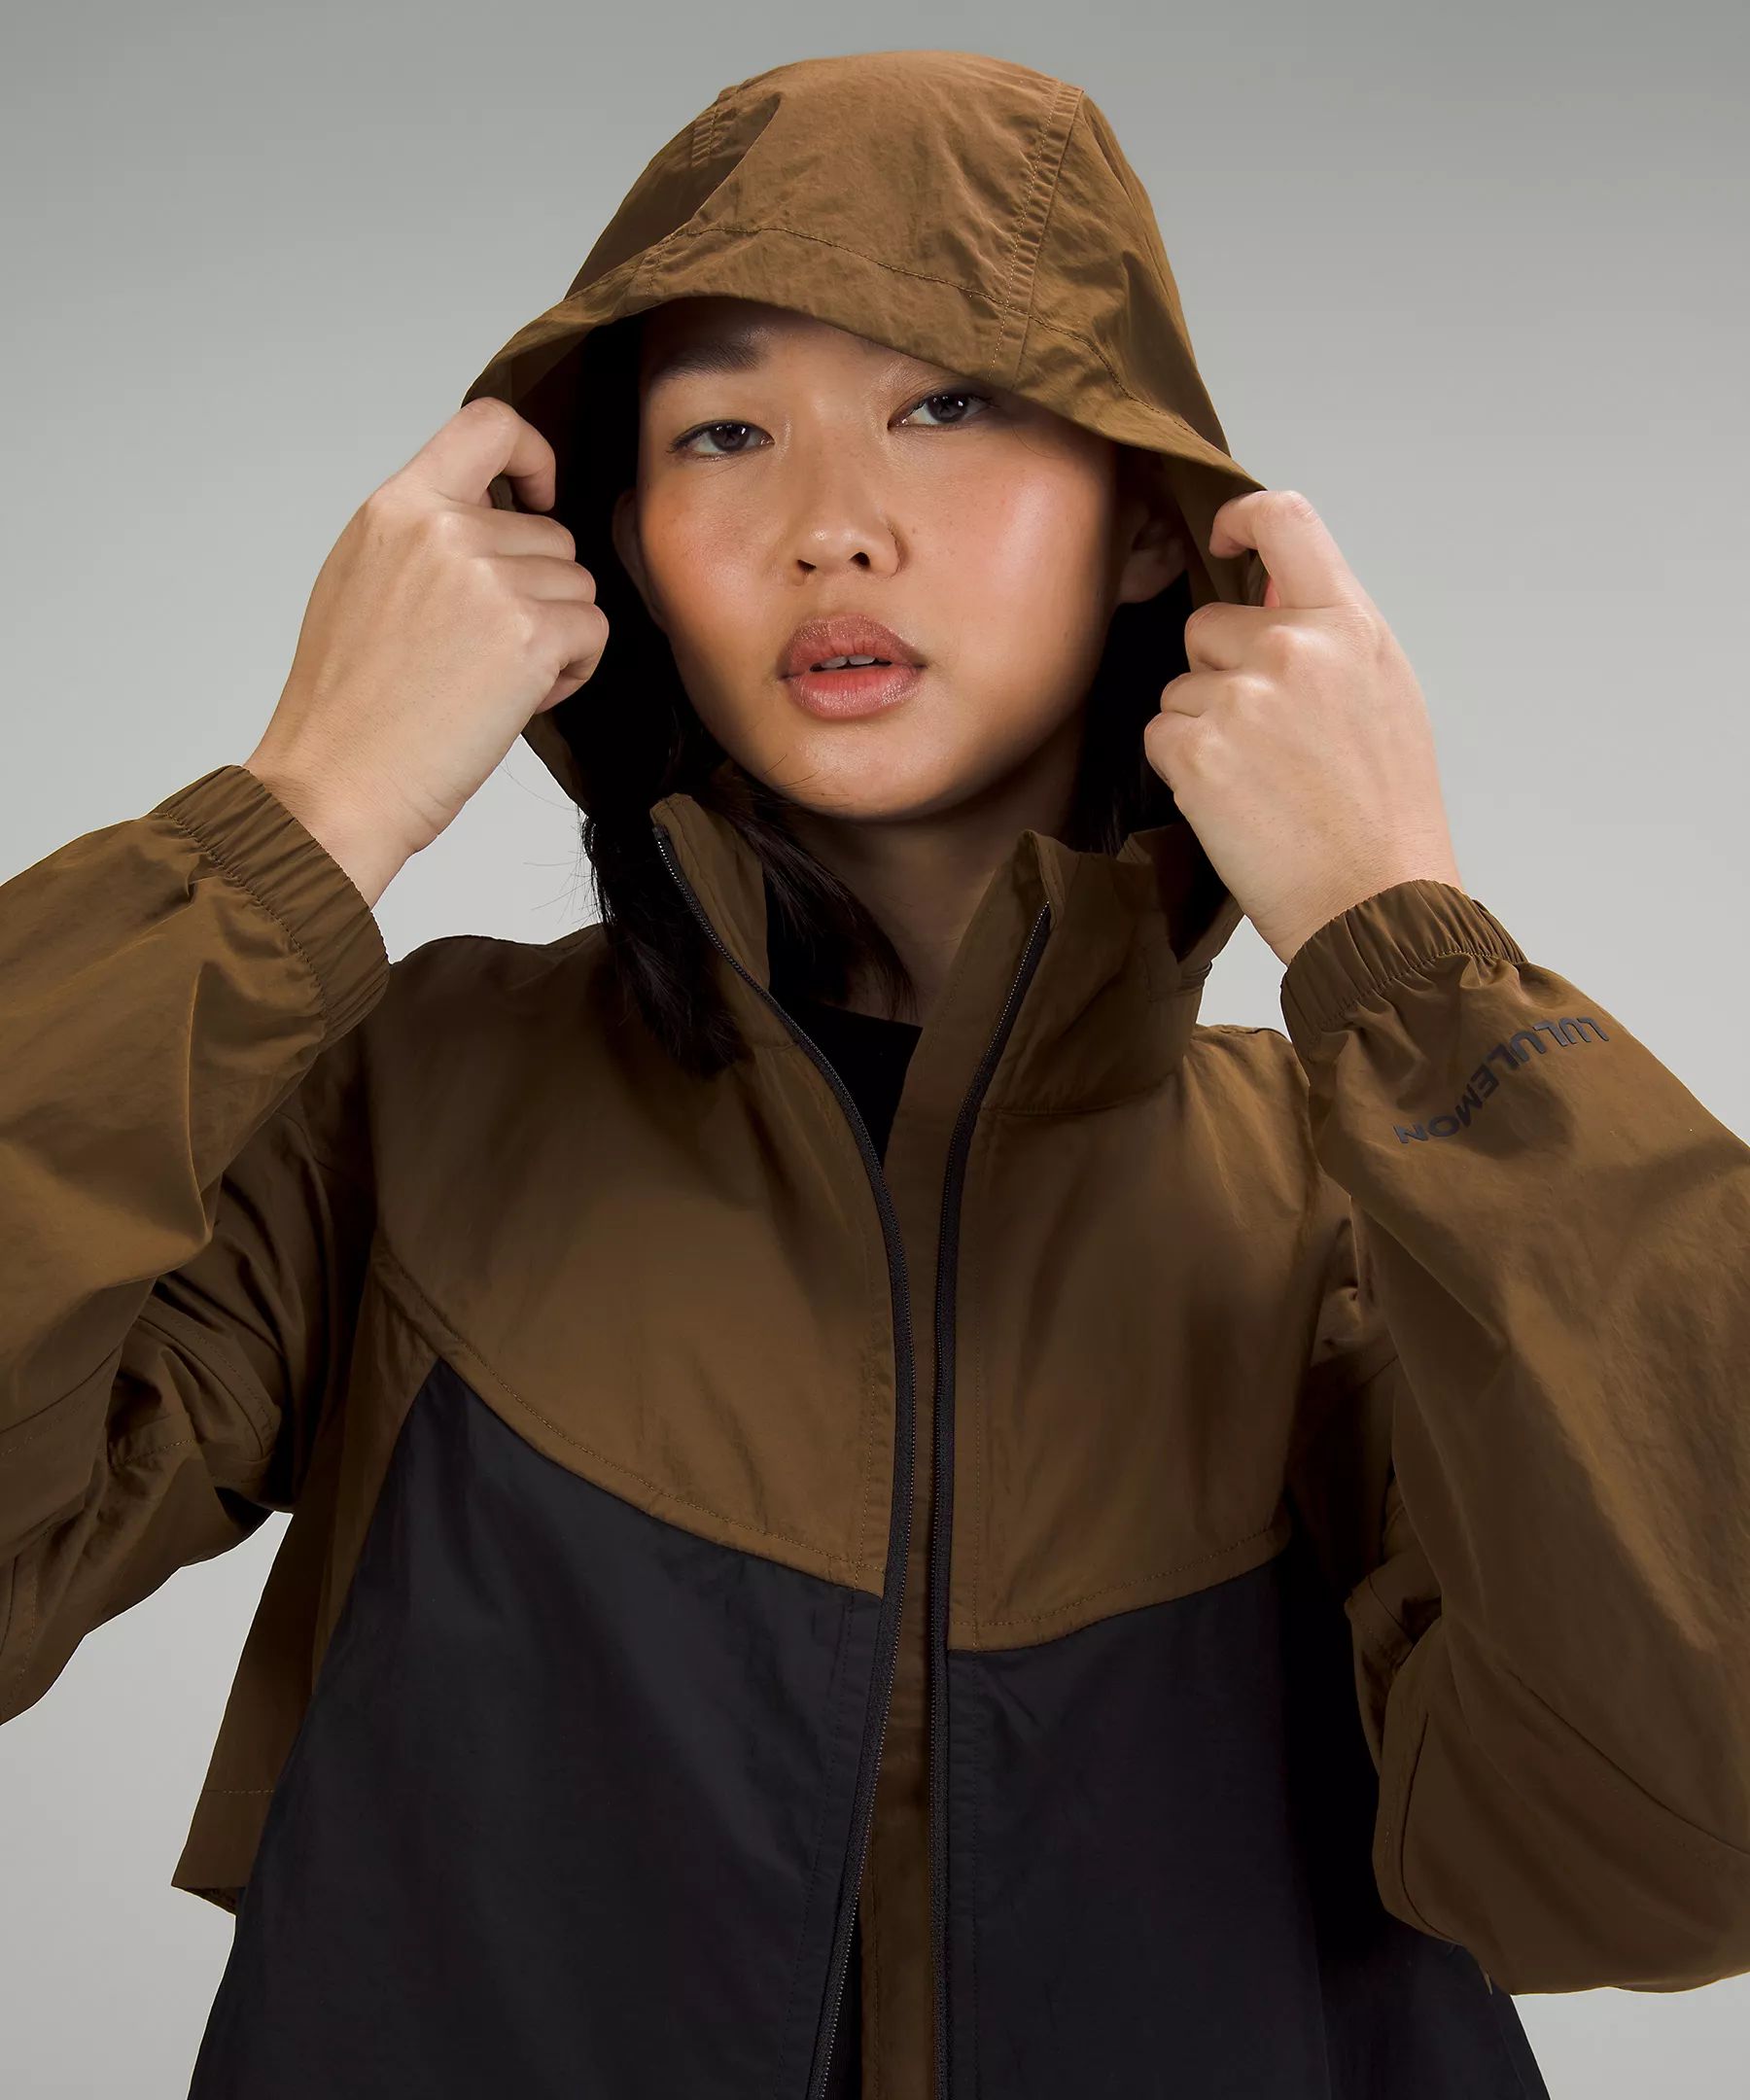 Evergreen Cropped Full-Zip Hoodie | Women's Coats & Jackets | lululemon | Lululemon (US)